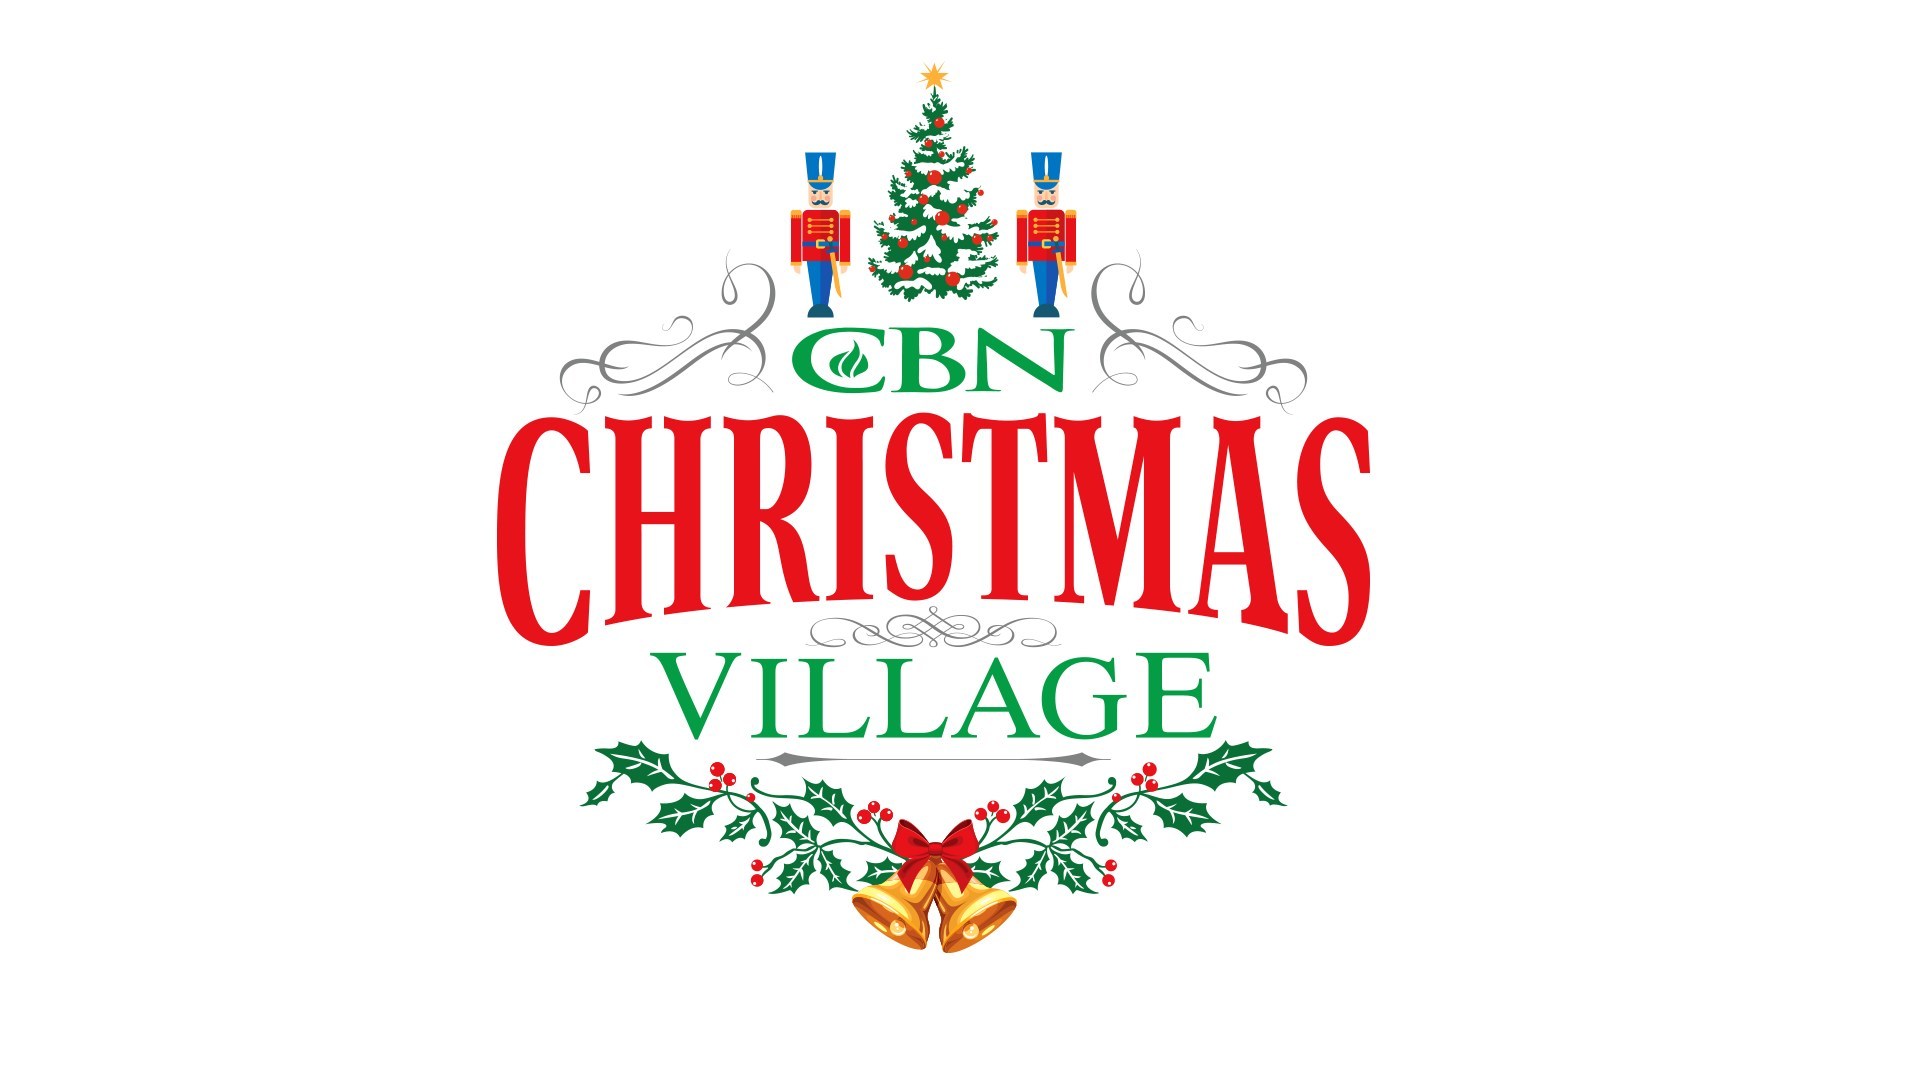 CBN CHRISTMAS VILLAGE Brings The Spirit Of European Christmas Markets